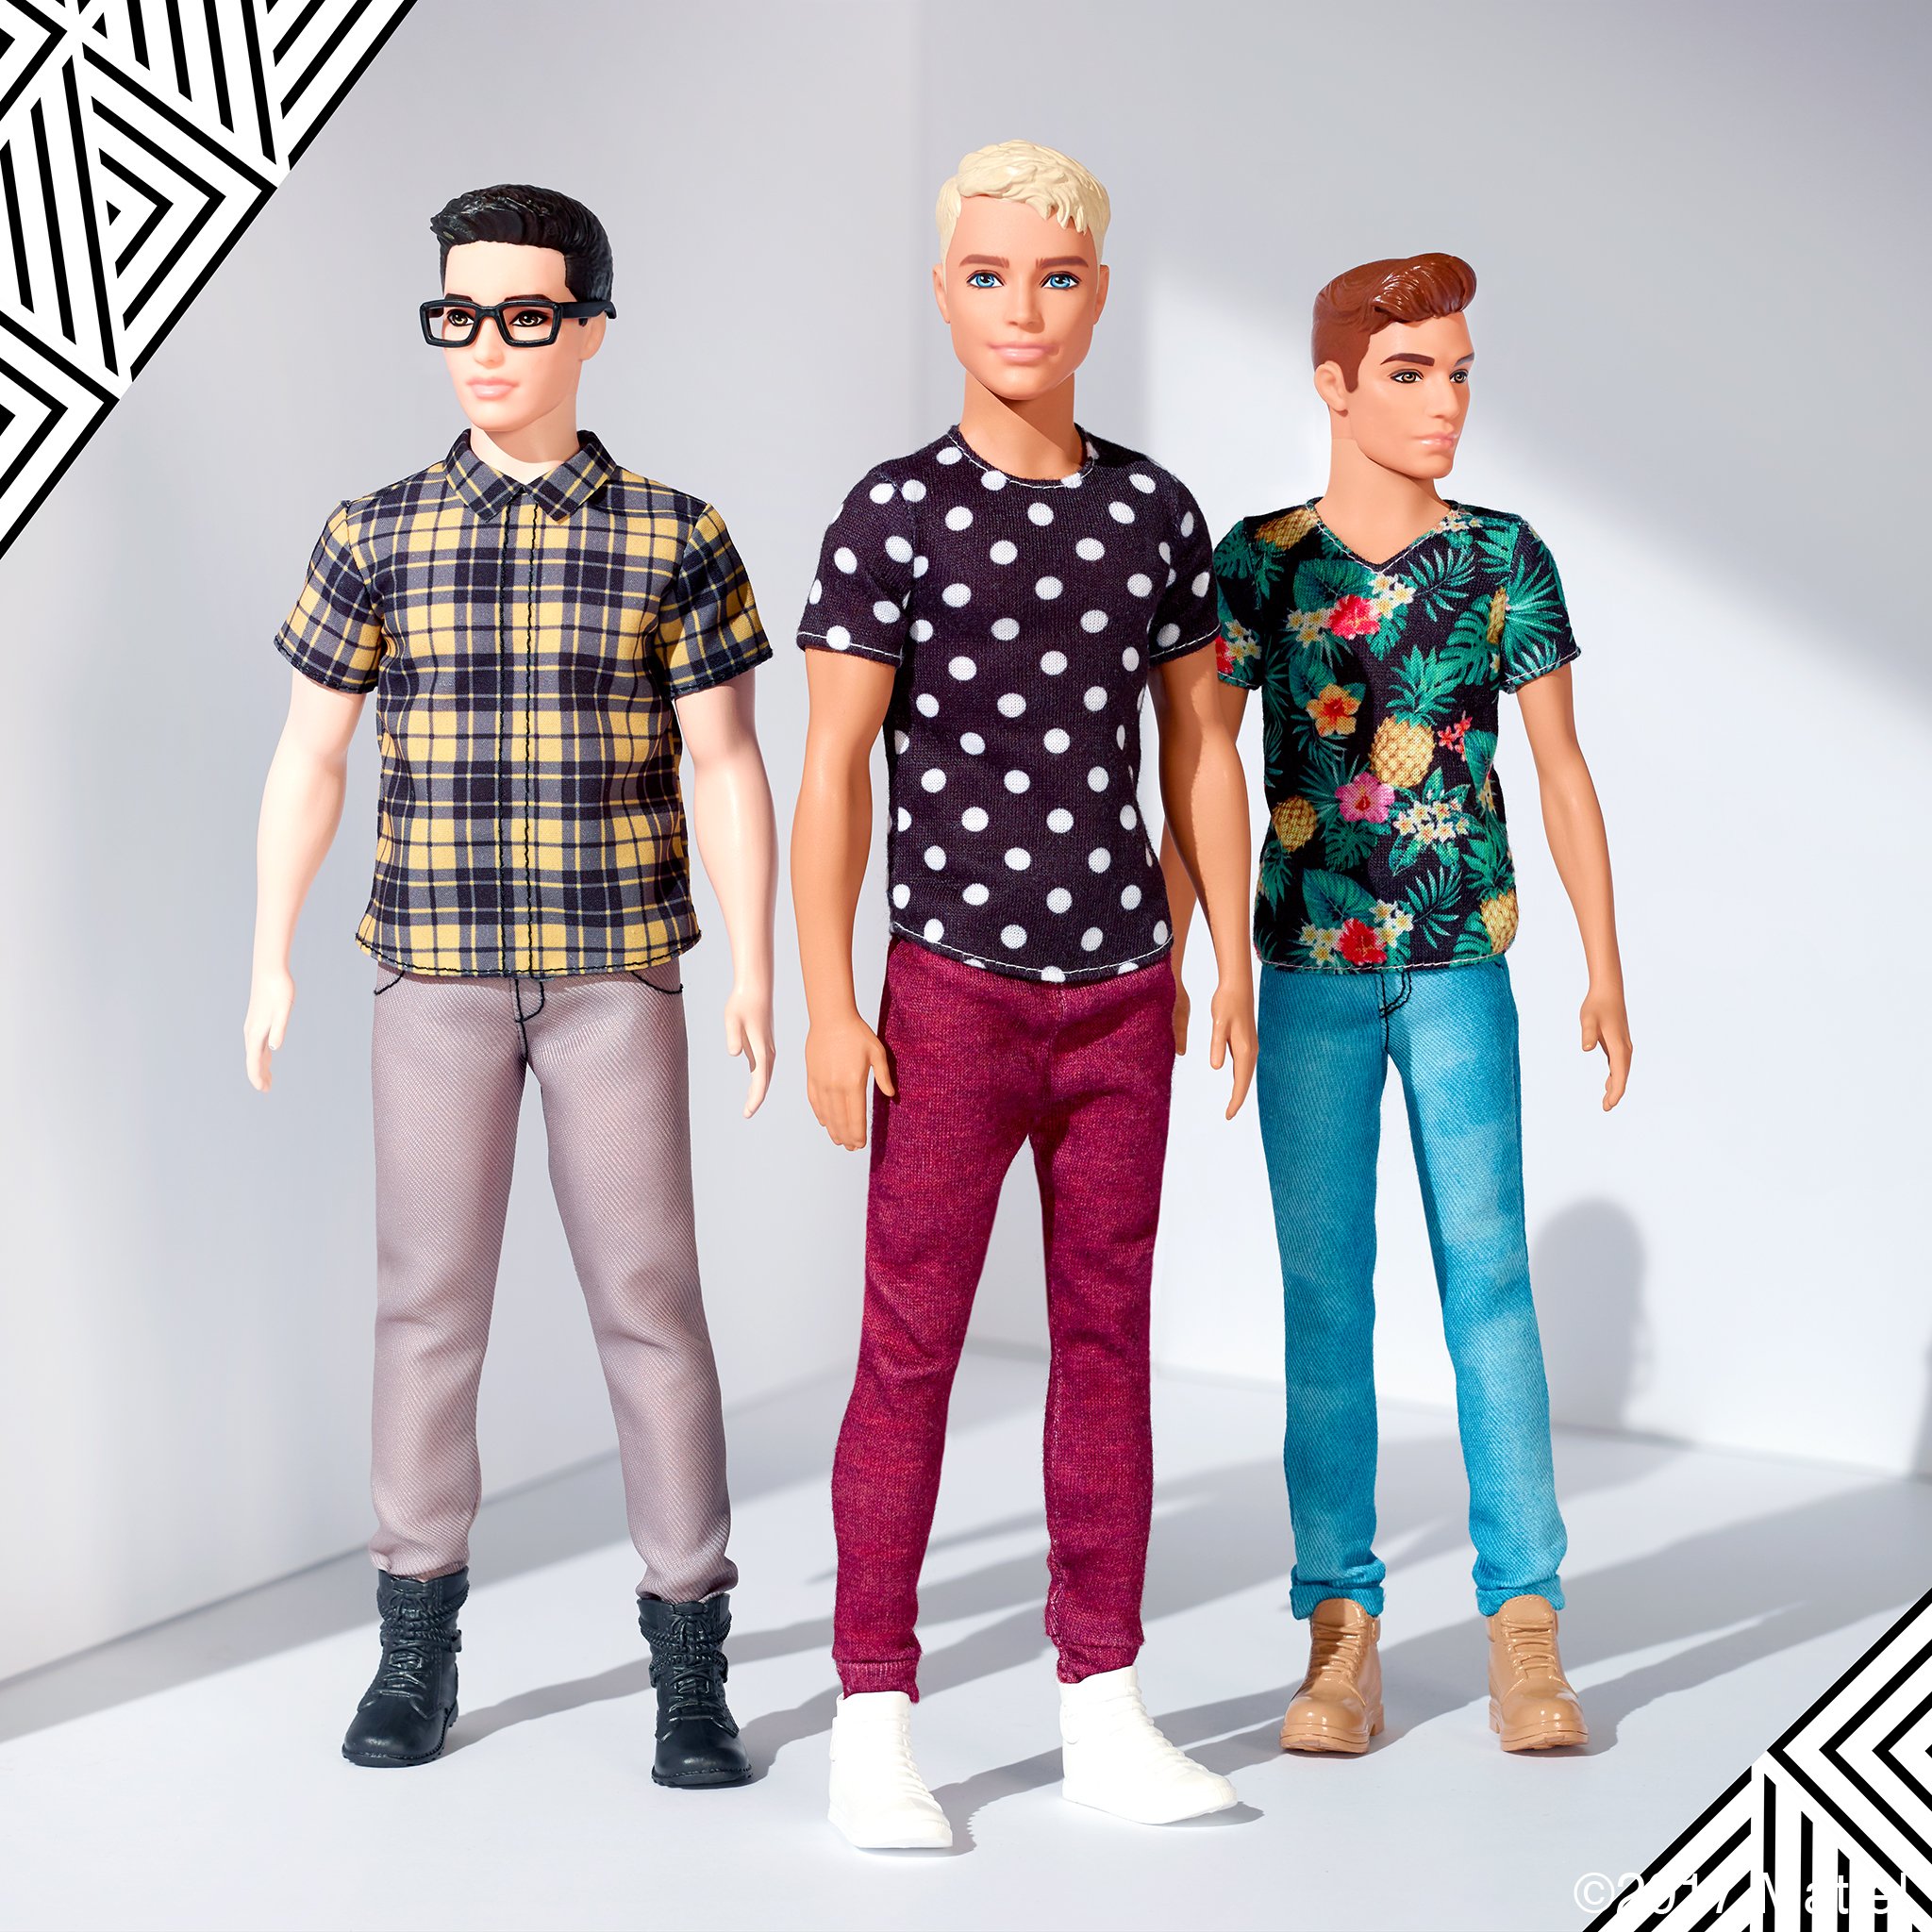 vloeistof Tonen kanaal Barbie on Twitter: "Ken you believe it? Broad, slim, and original Ken join  the New Crew in style. #TheDollEvolves Shop the dolls:  https://t.co/ebeFD1whgR https://t.co/KFM9hyfLwo" / Twitter